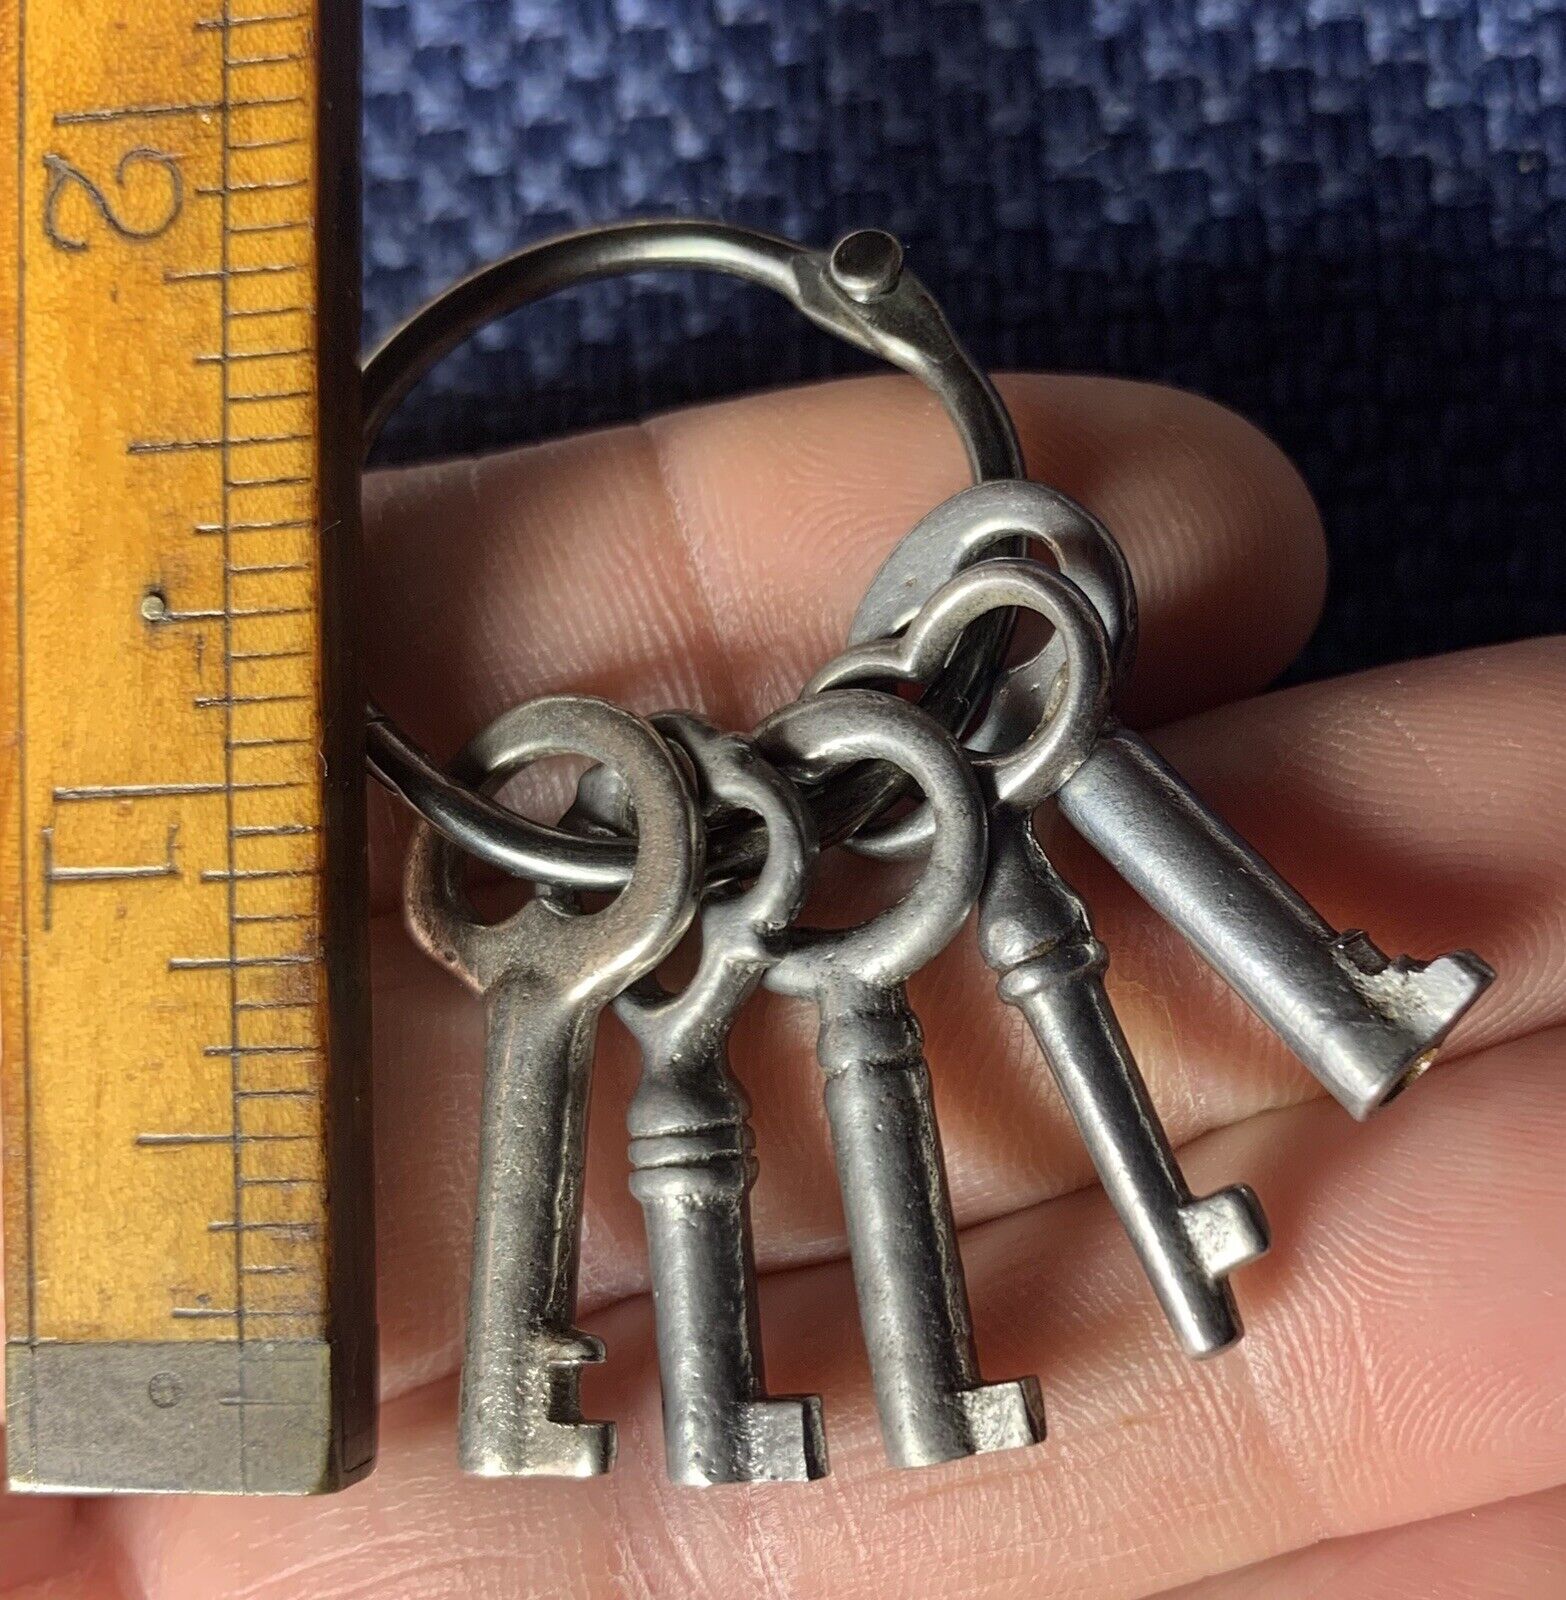 Tiny Vintage Antique Small Skeleton Keys